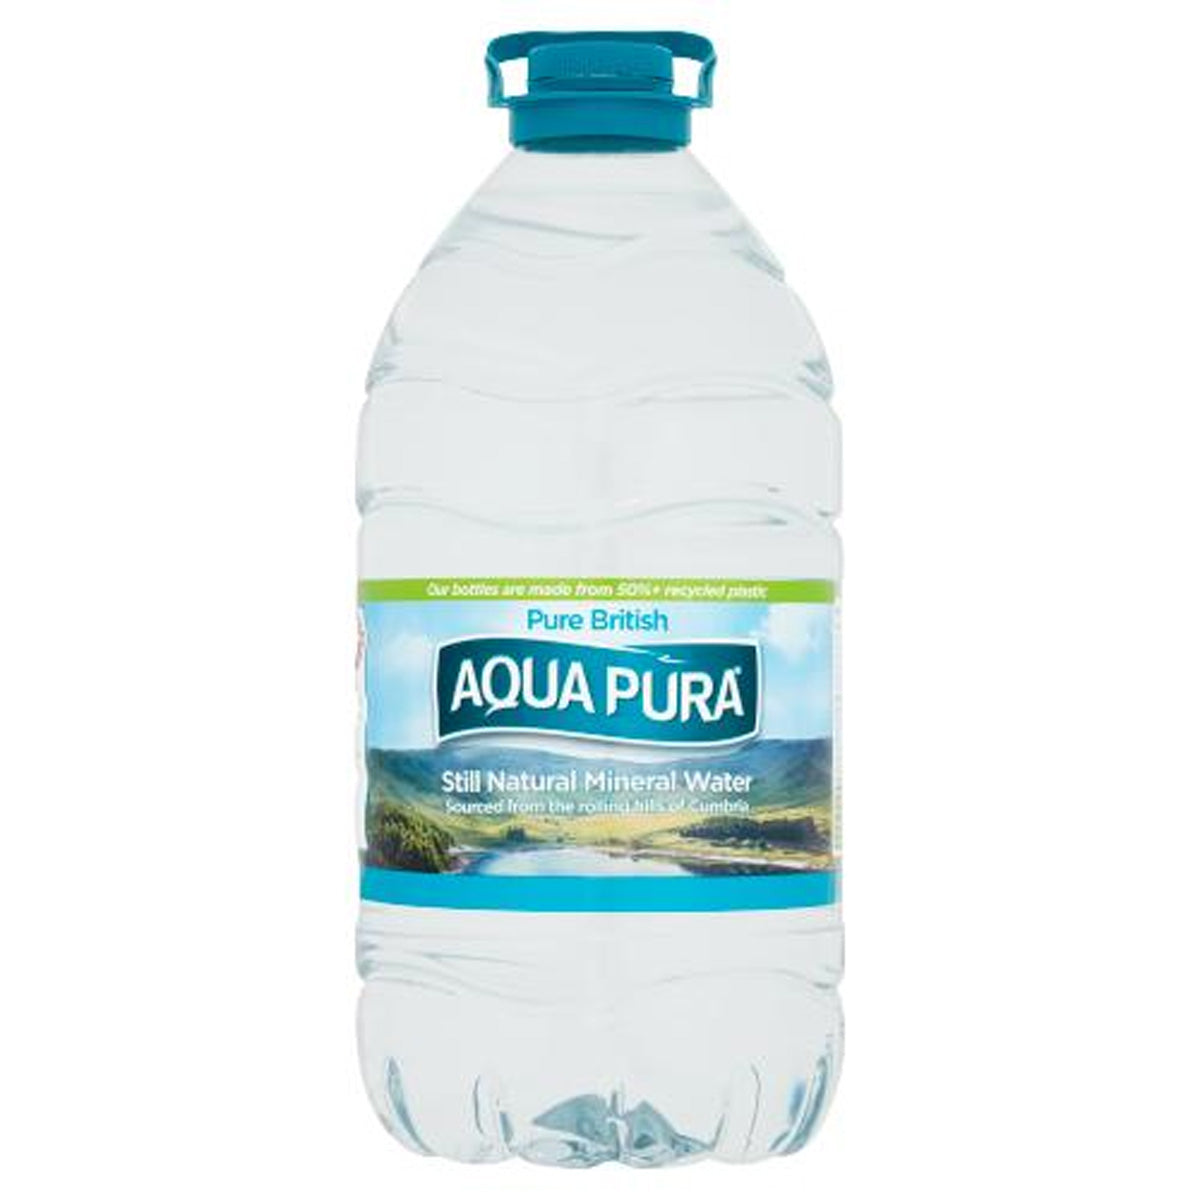 Aqua Pura - Still Natural Mineral Water - 5L - Continental Food Store